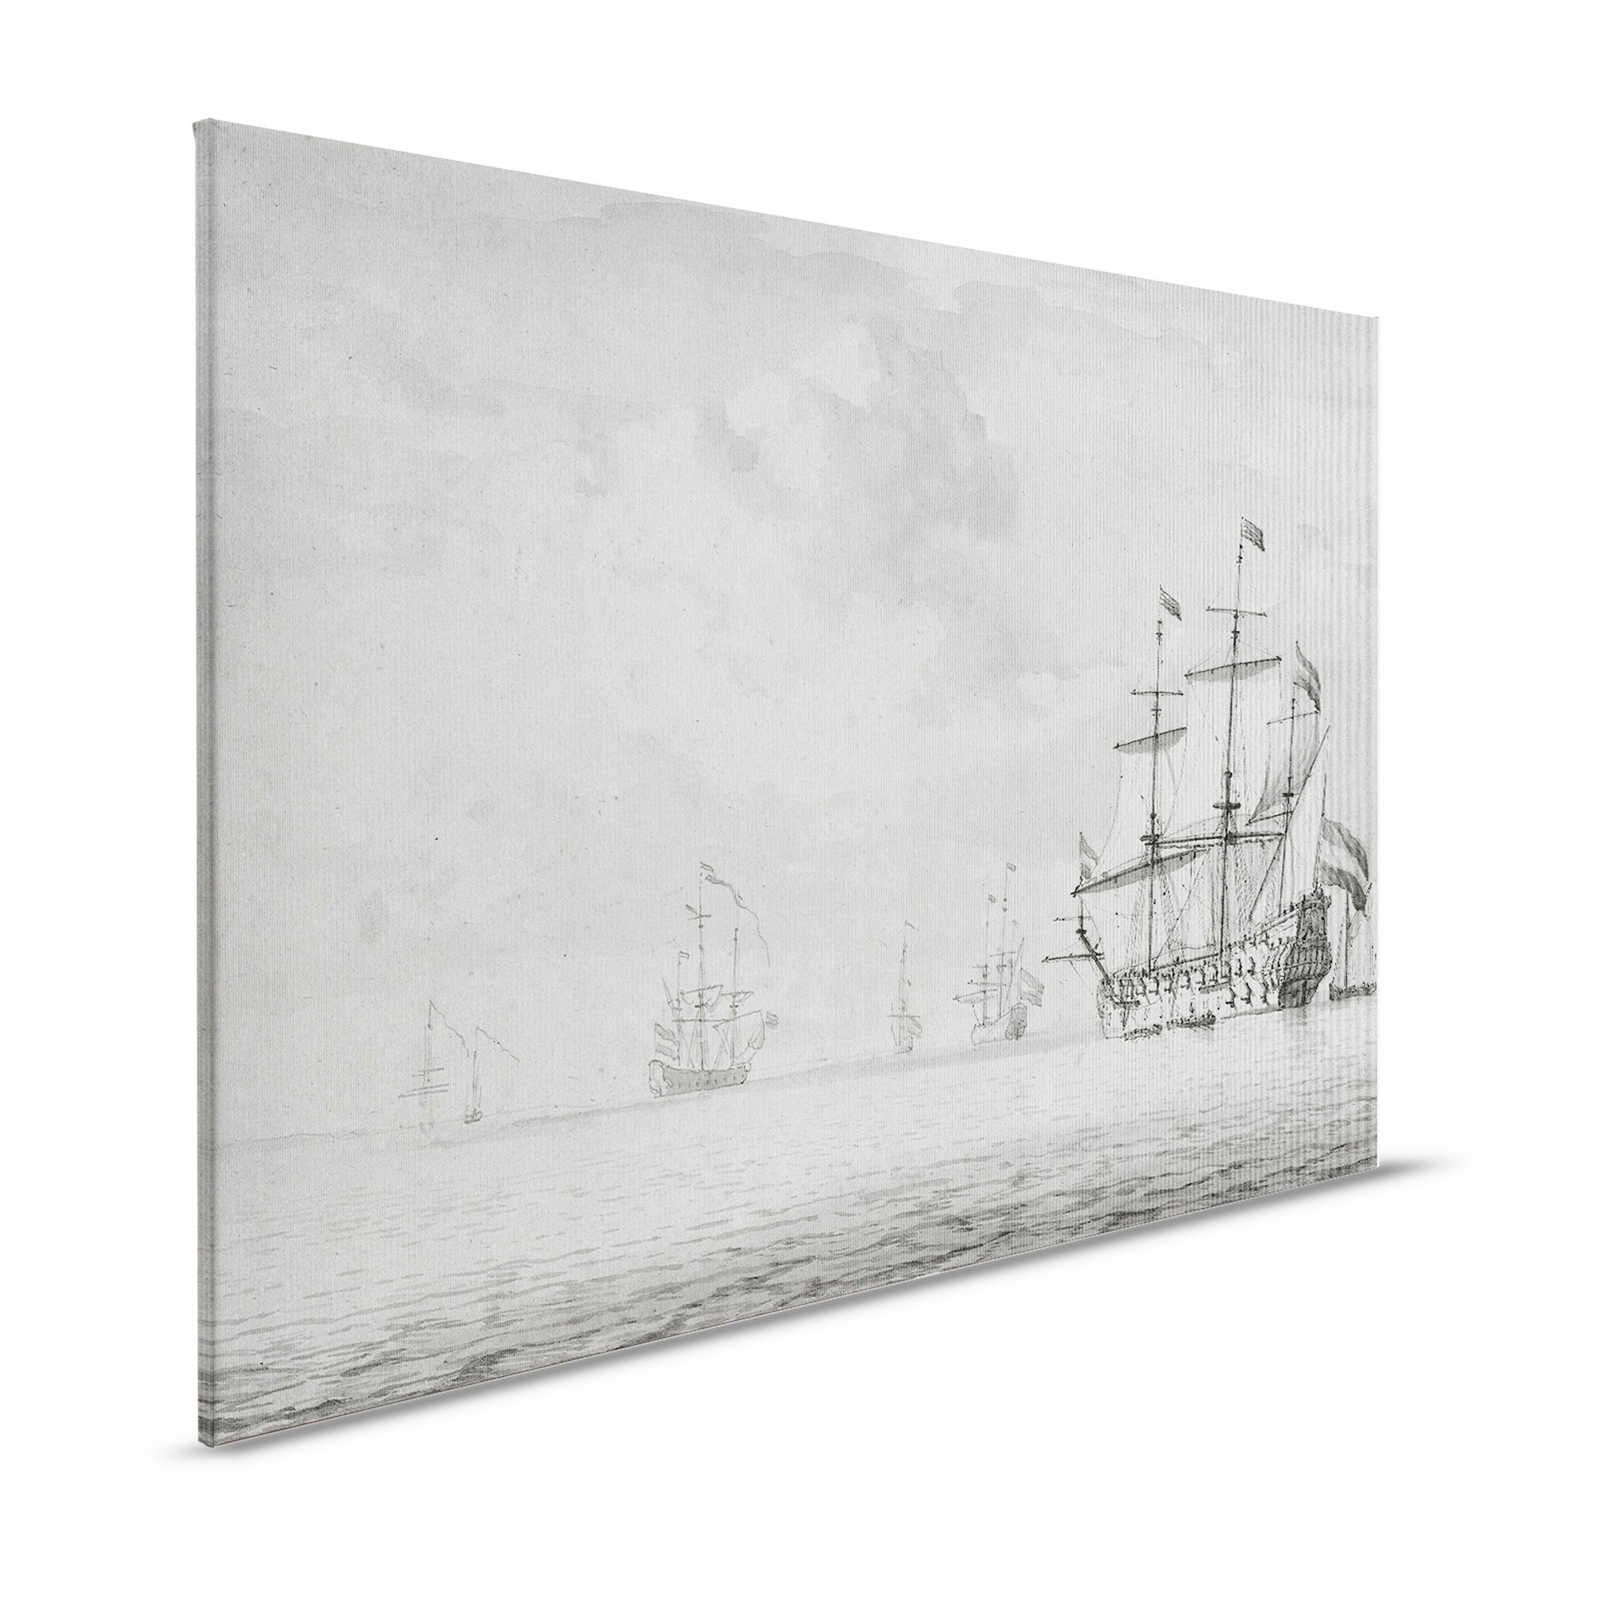 Sul mare 2 - Quadro su tela grigio-beige Navi stile pittura vintage - 1,20 m x 0,80 m
